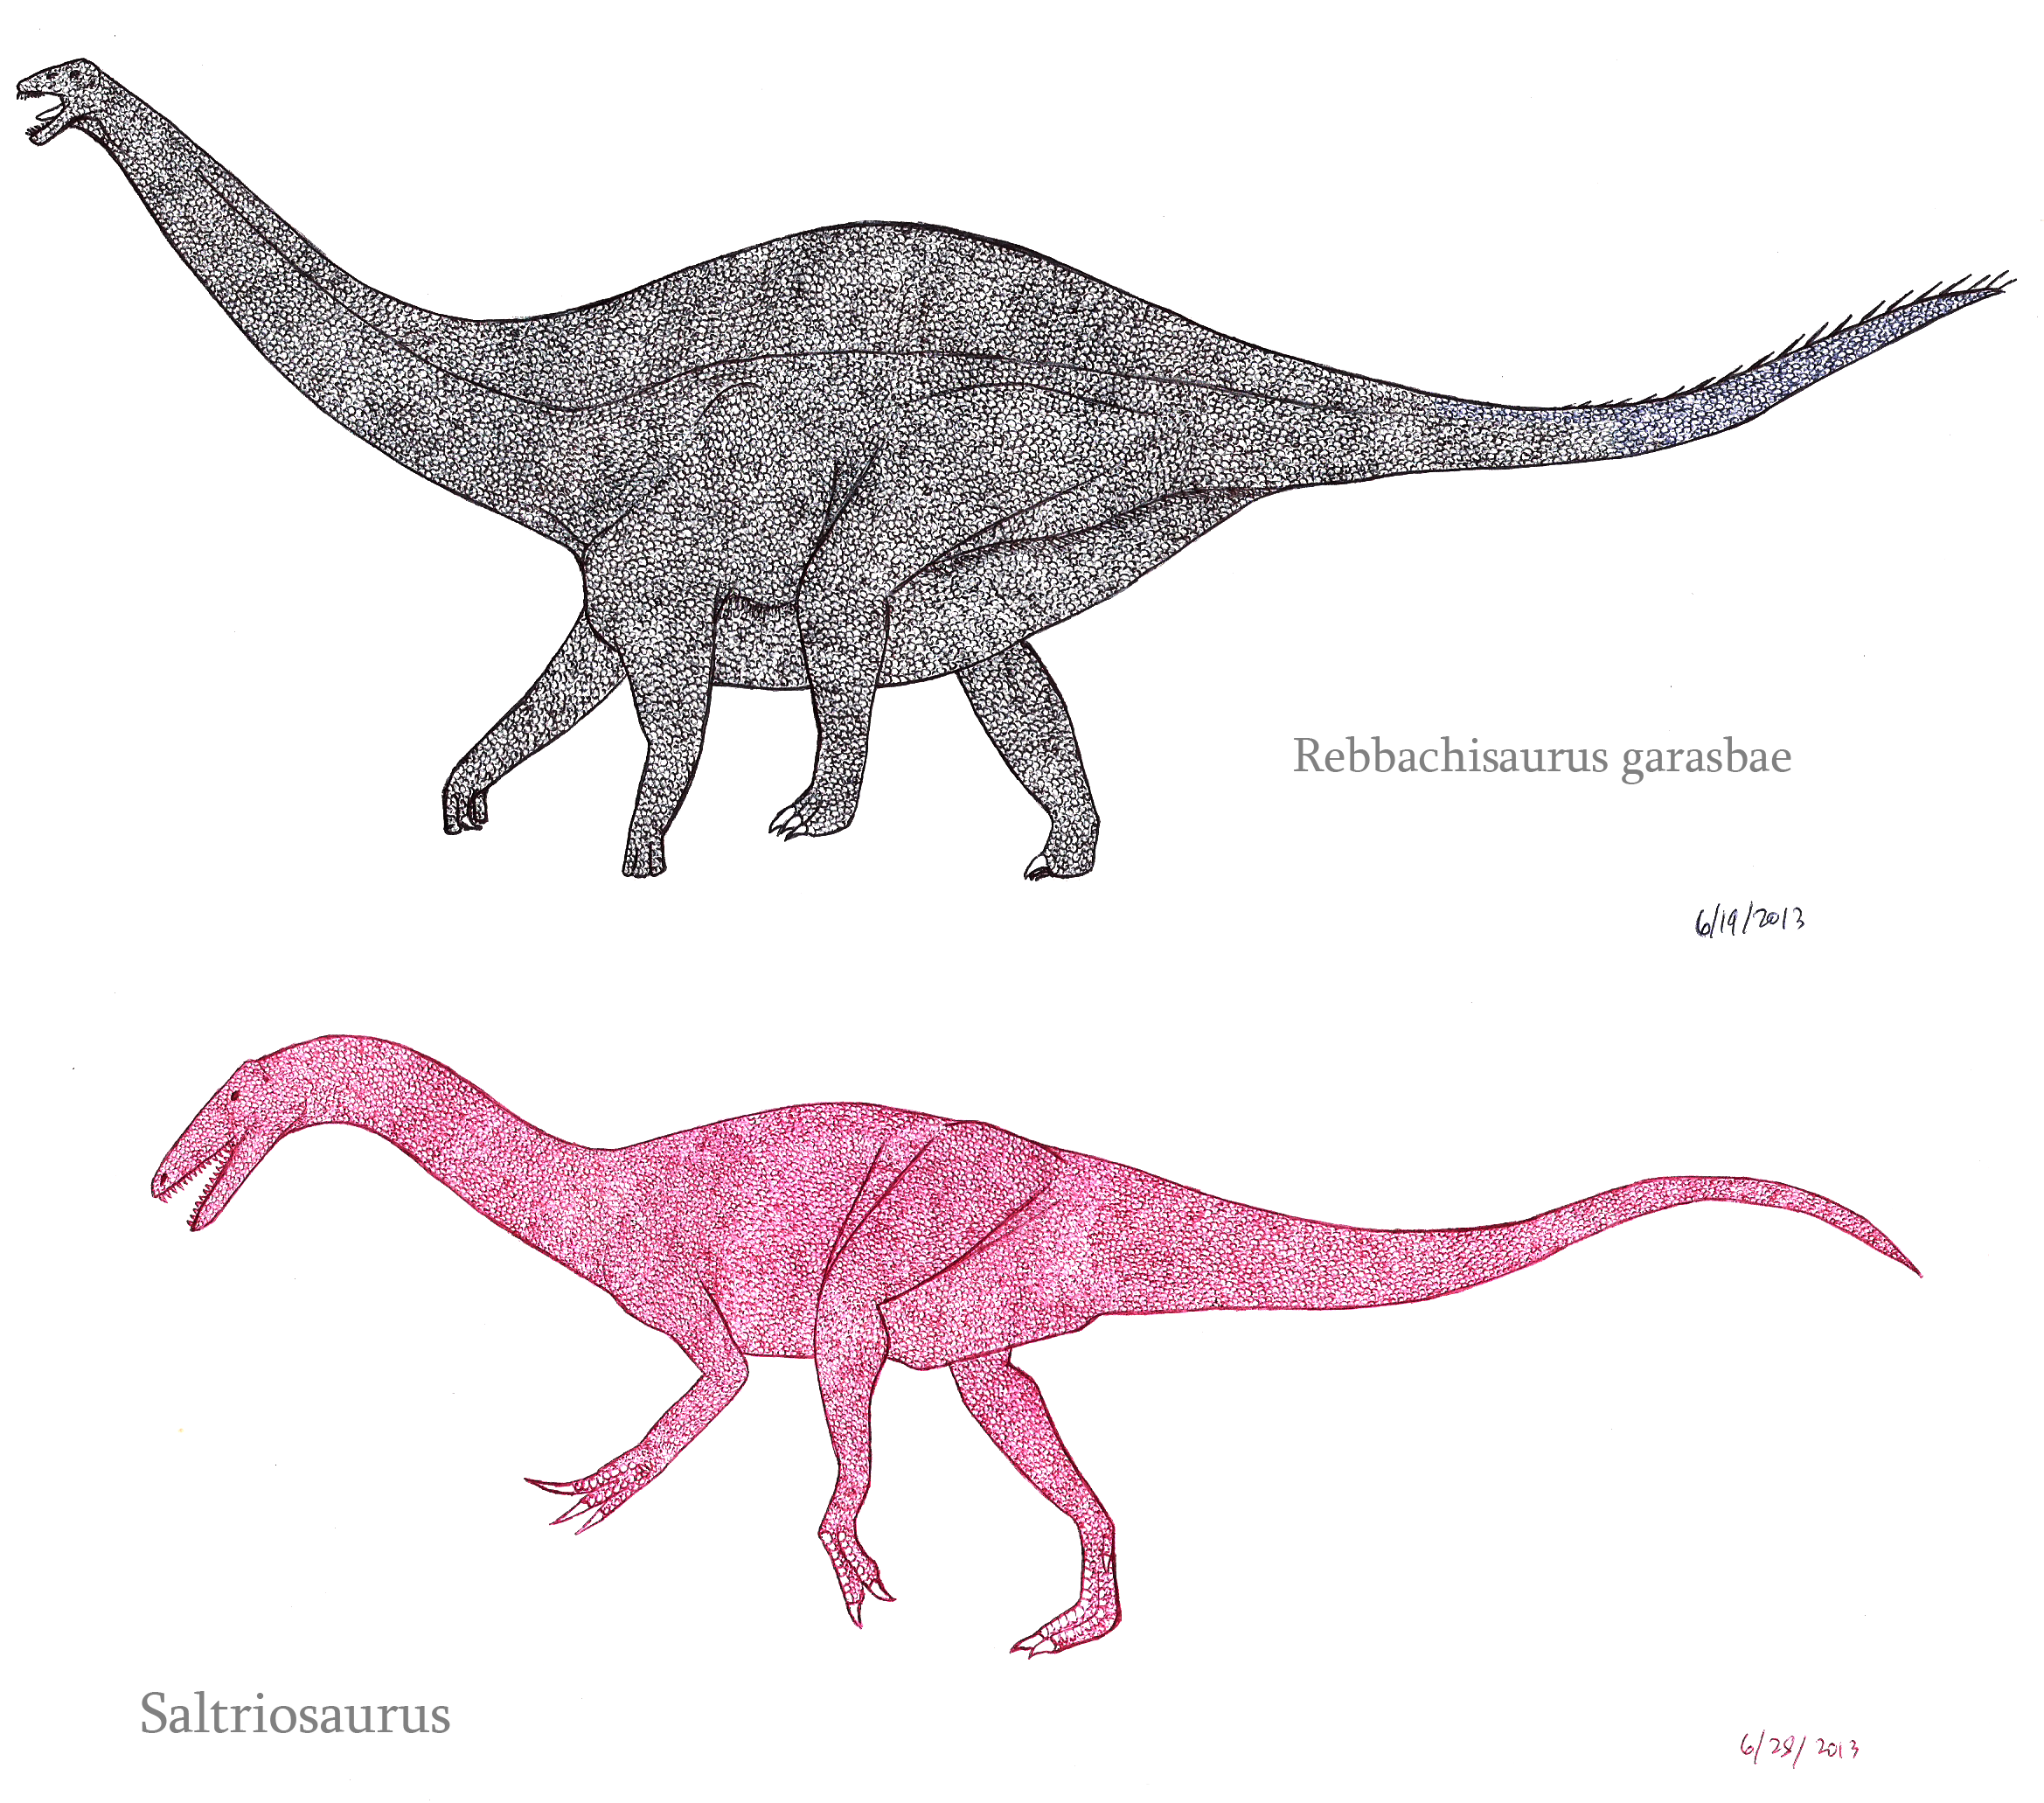 Rebbachisaurus and Saltriosaurus